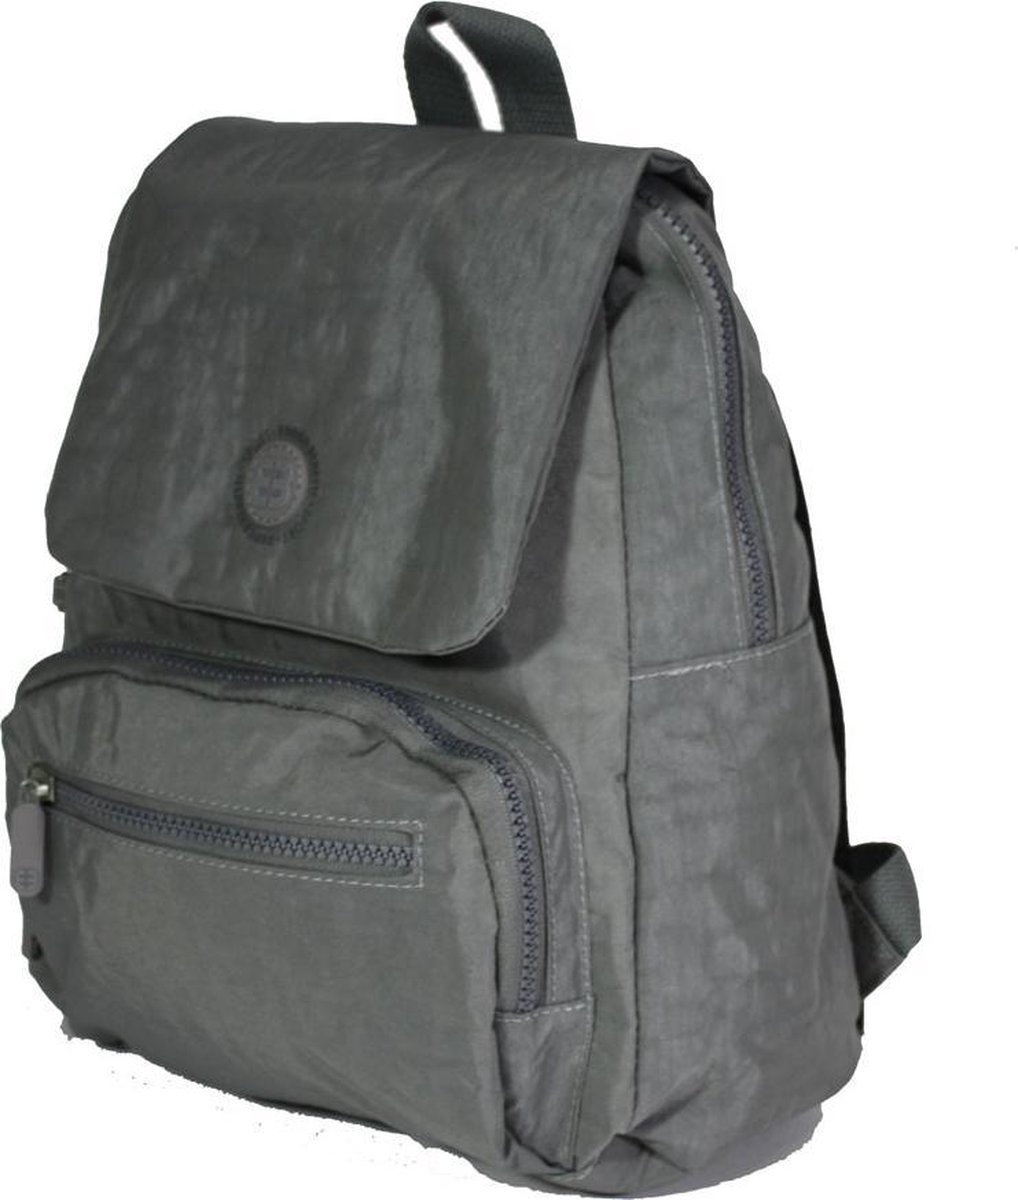 City backpack/Wandel rugzak lichtgewicht mid grey